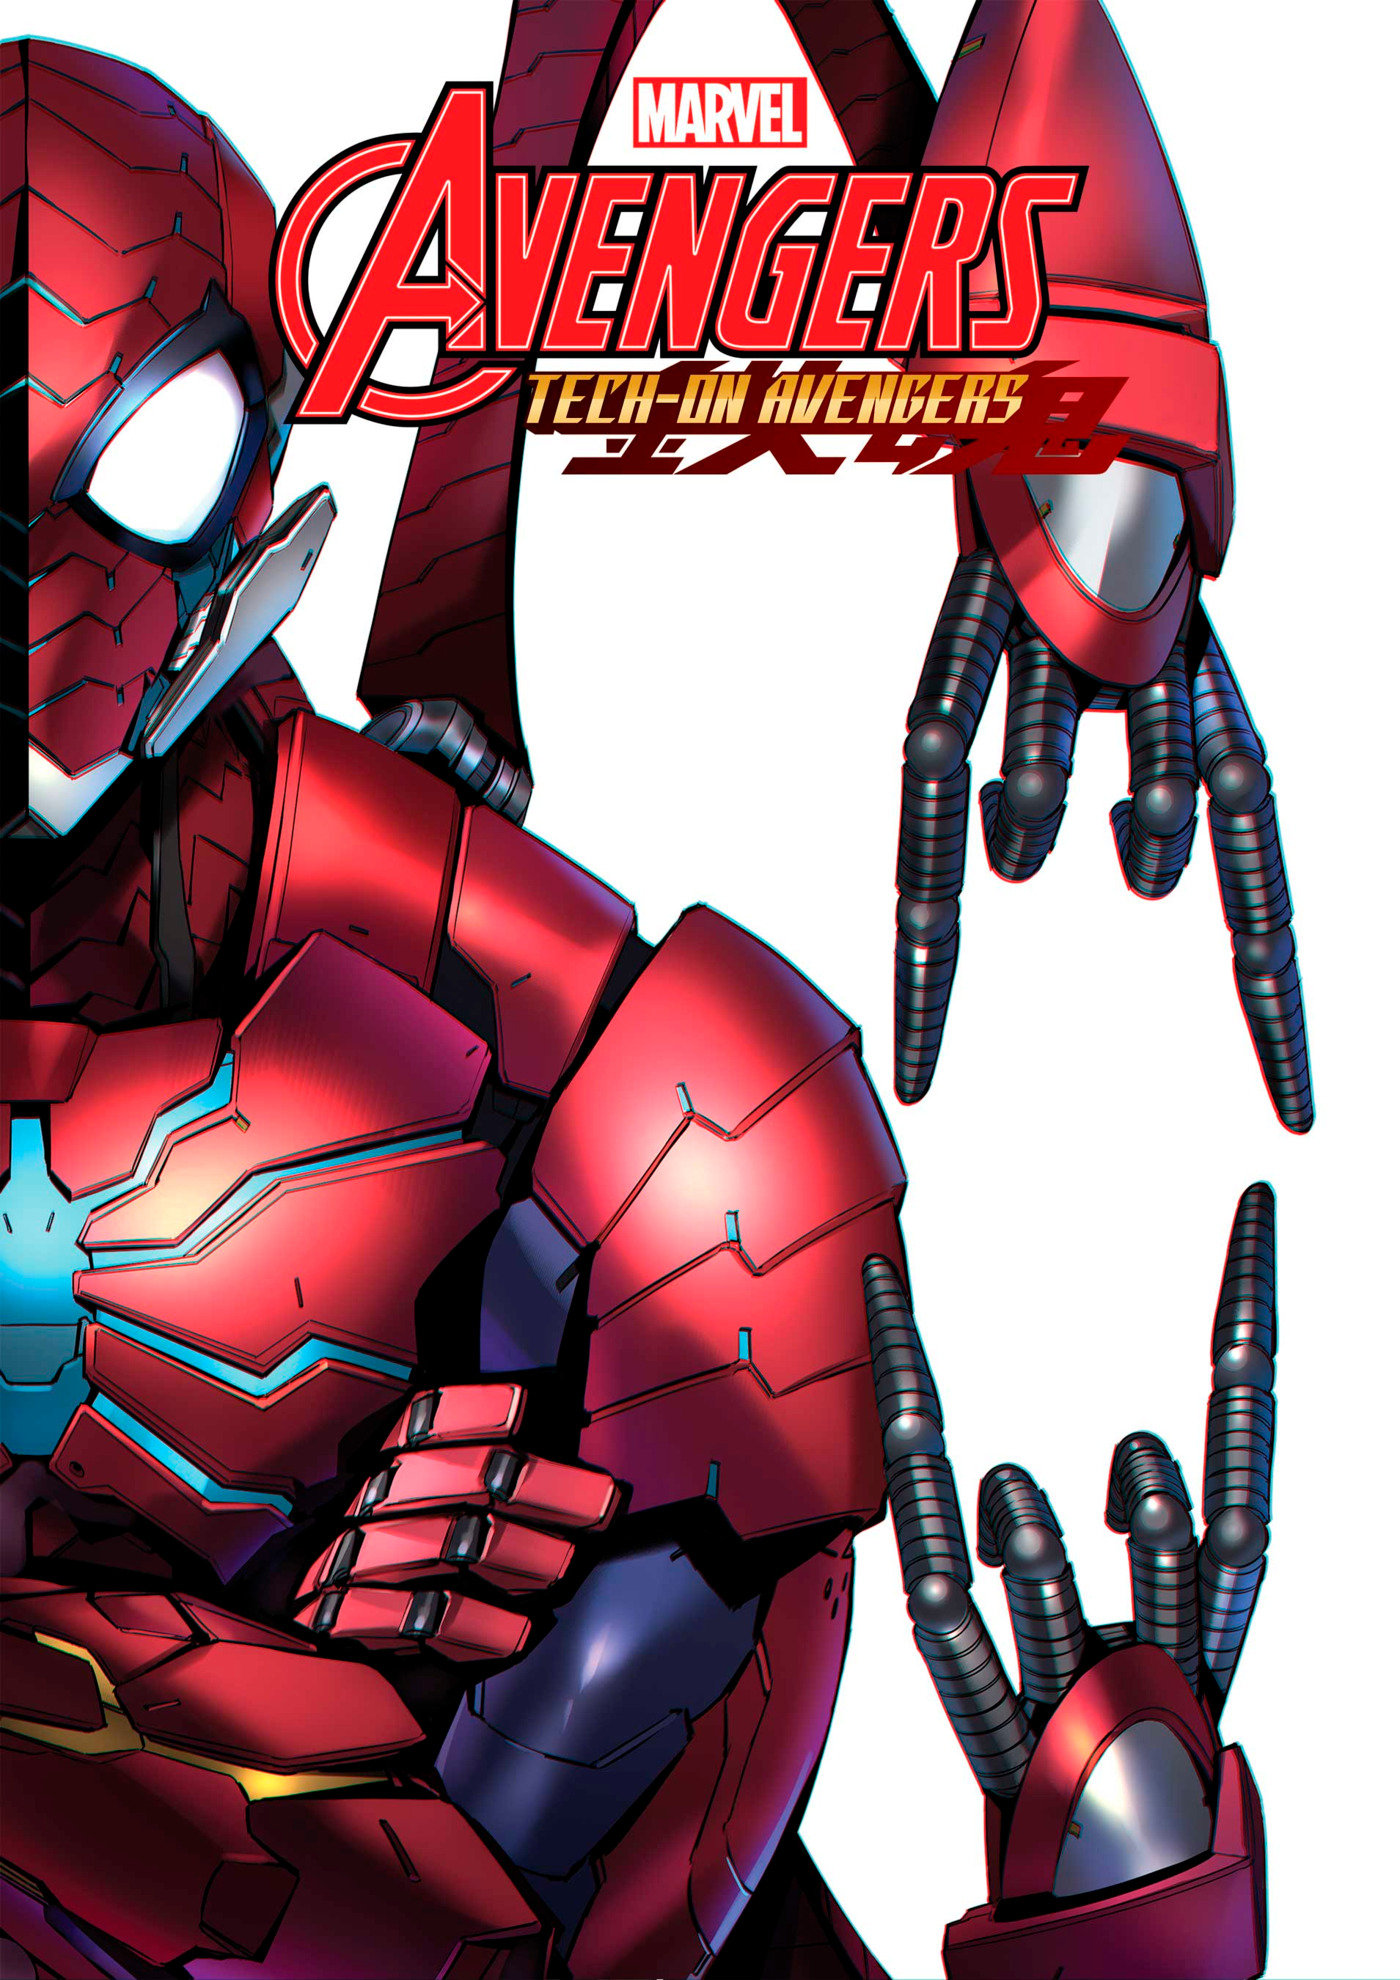 Avengers Tech-On #6 (Of 6)